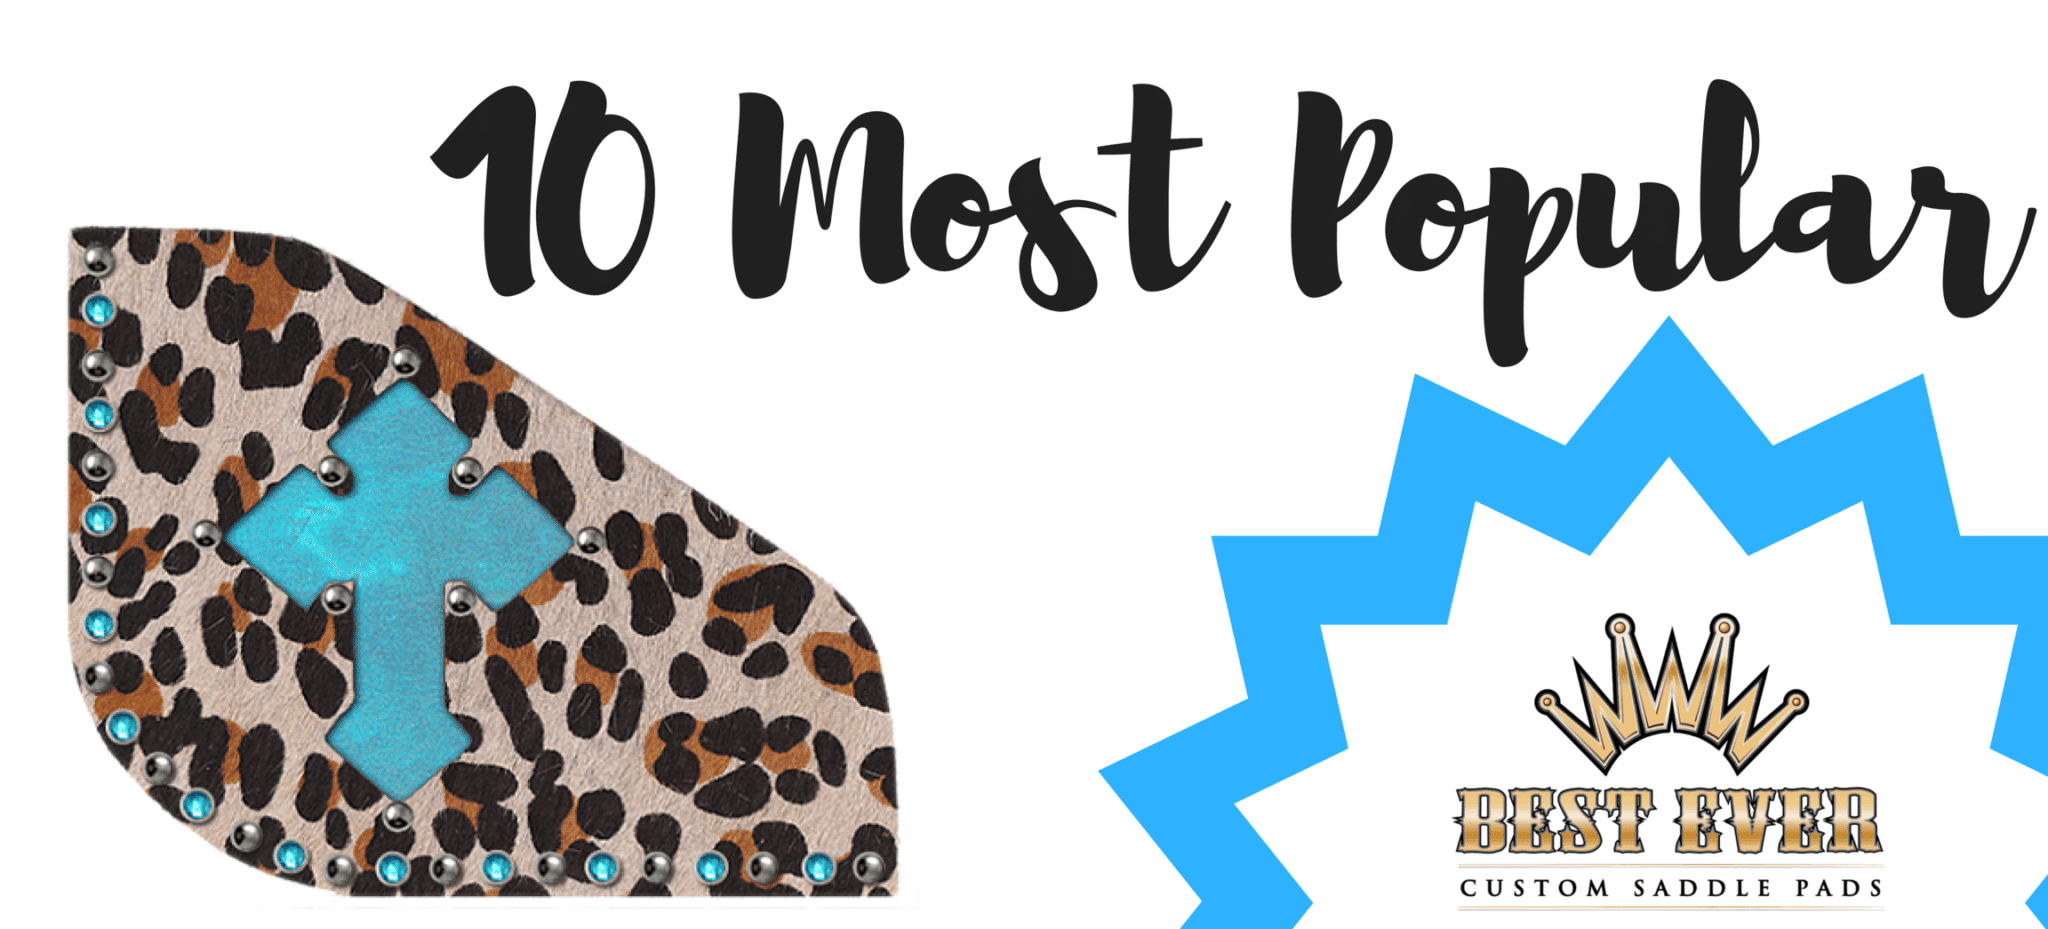 10 Most Popular